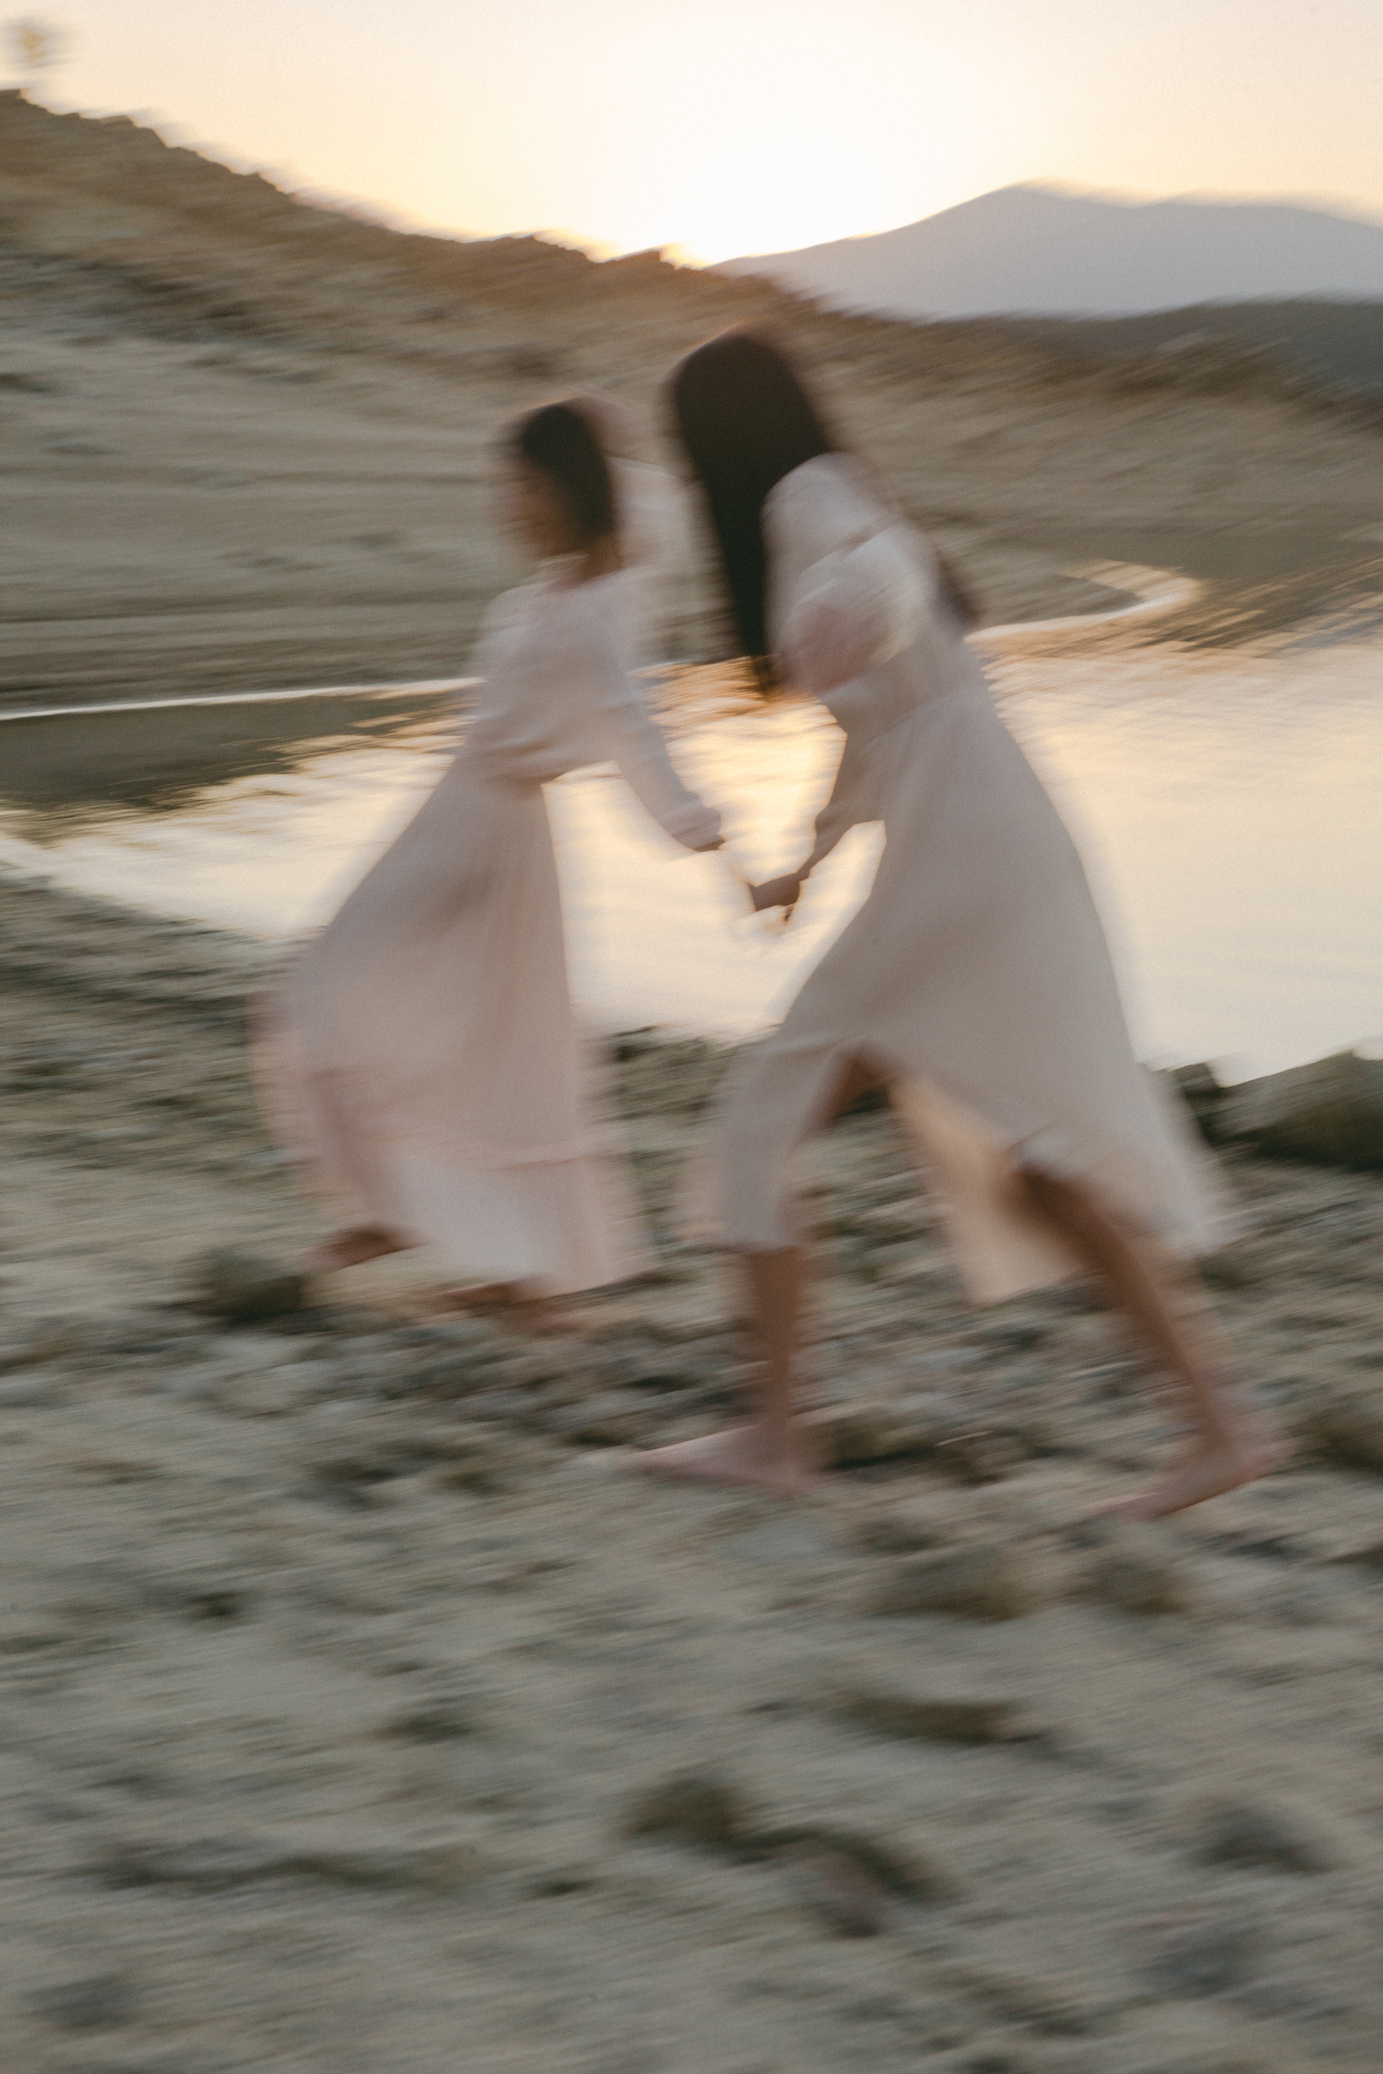 Women in Sheer Dresses Walking on the Shore